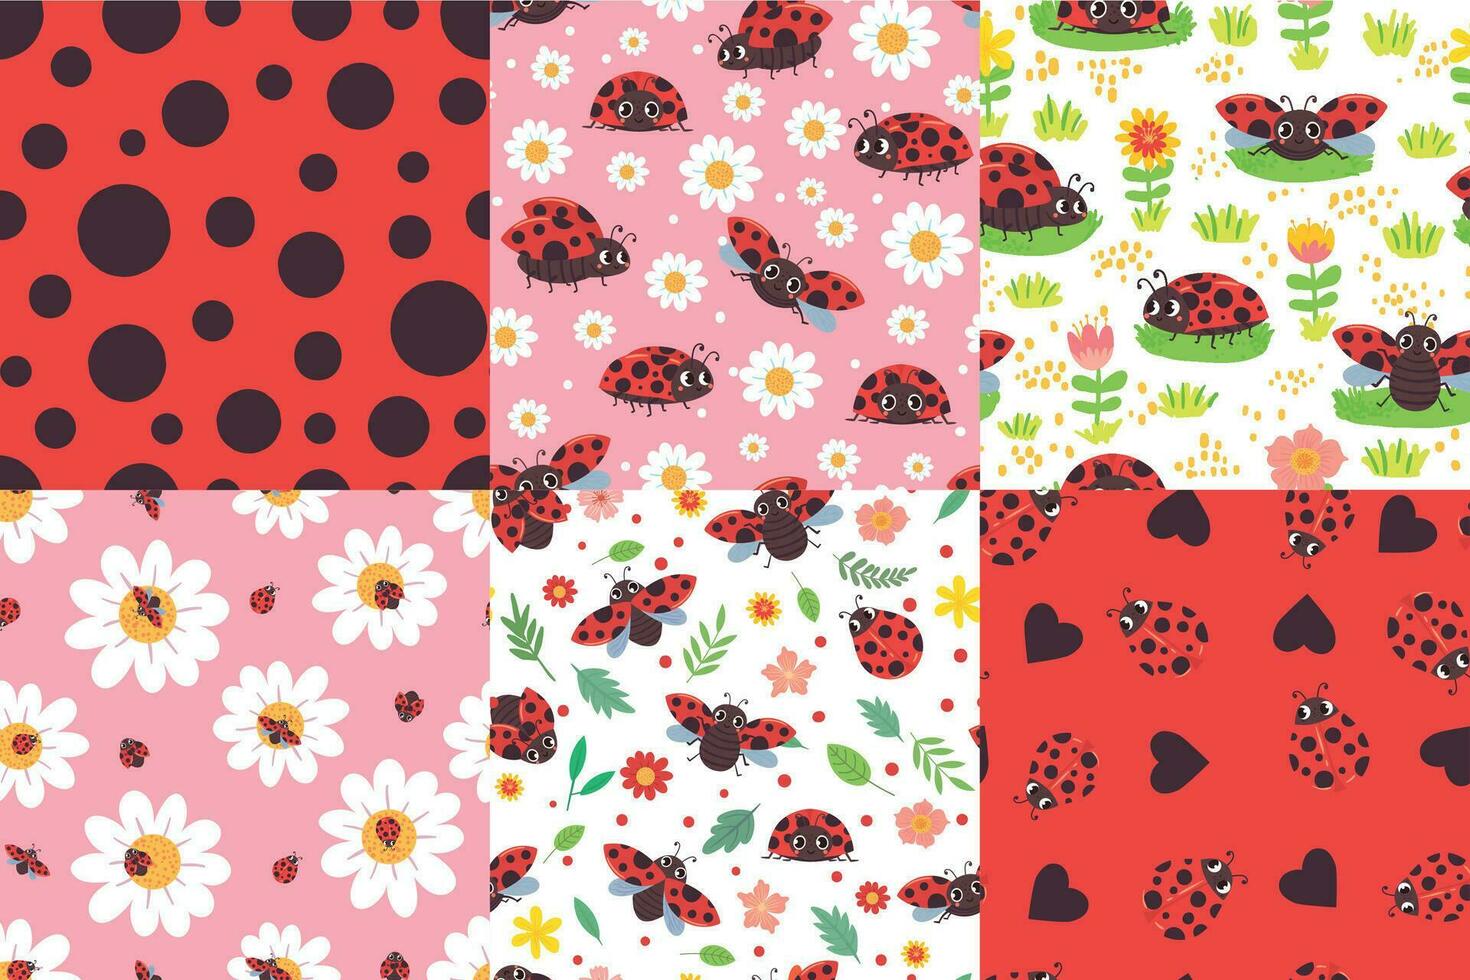 Cartoon ladybug seamless pattern. Ladybird texture, ladybugs in flowers and cute red bug vector illustration set